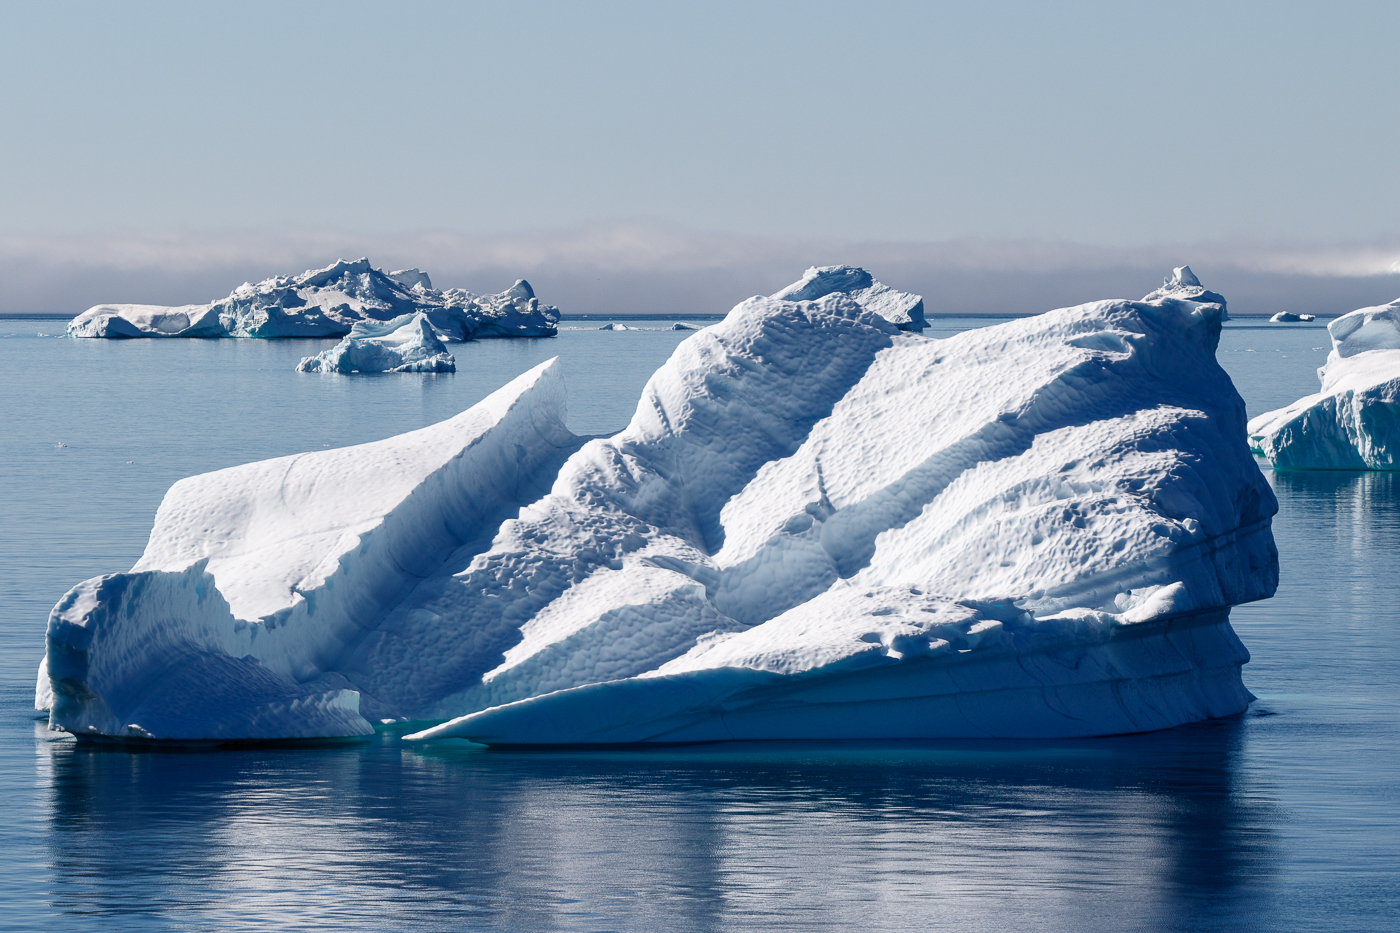 Iceberg Fragment Floating in Savit Bay